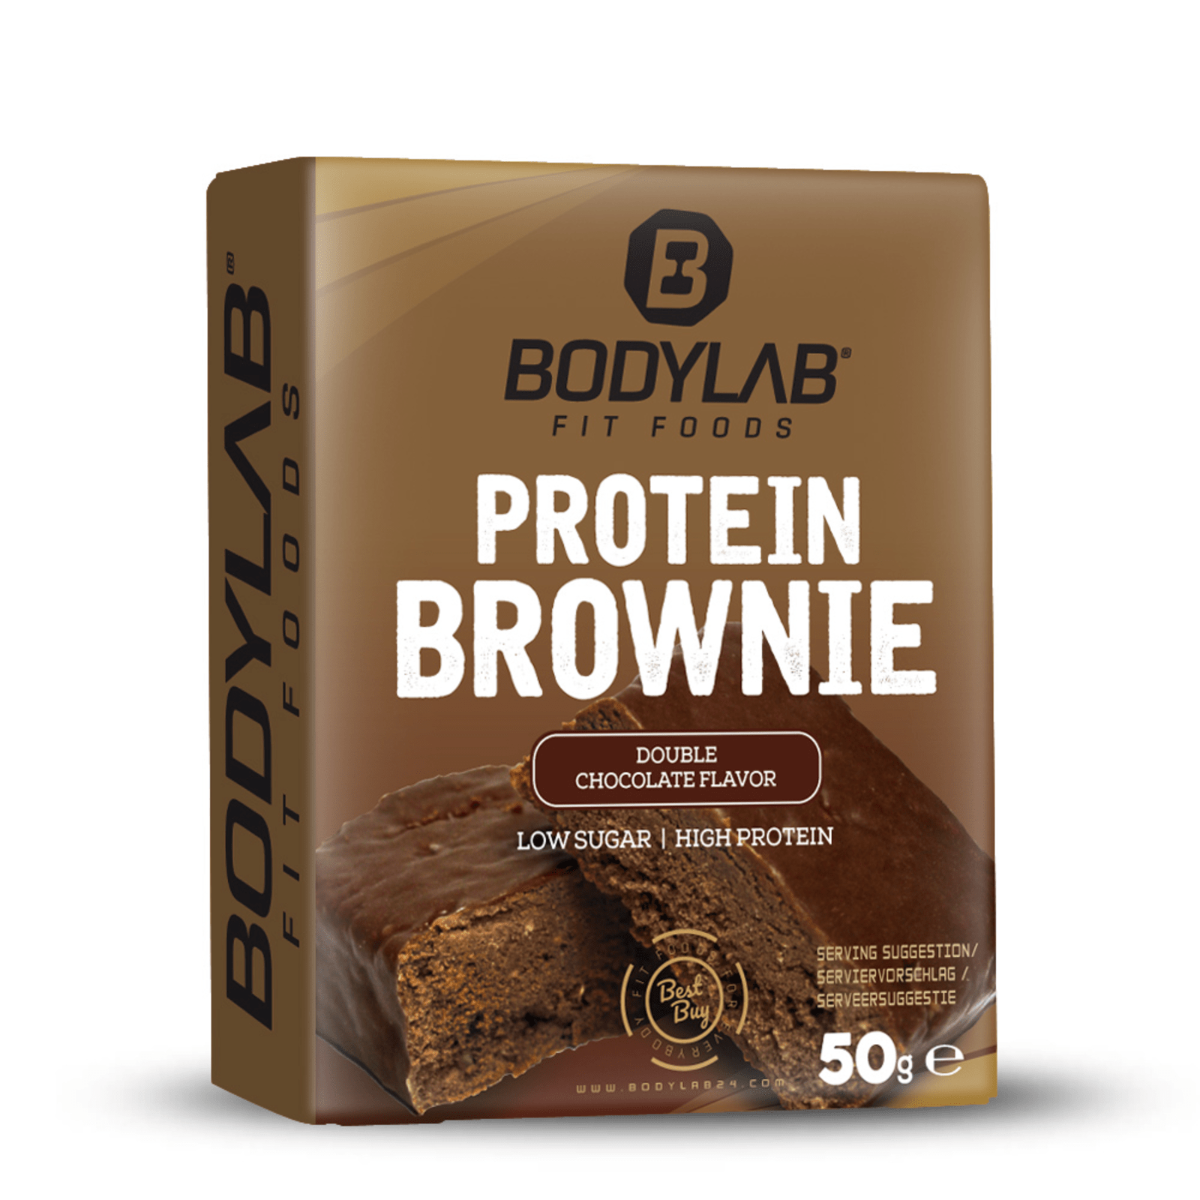 Protein Brownie - Bodylab24 arašídové máslo 50 g